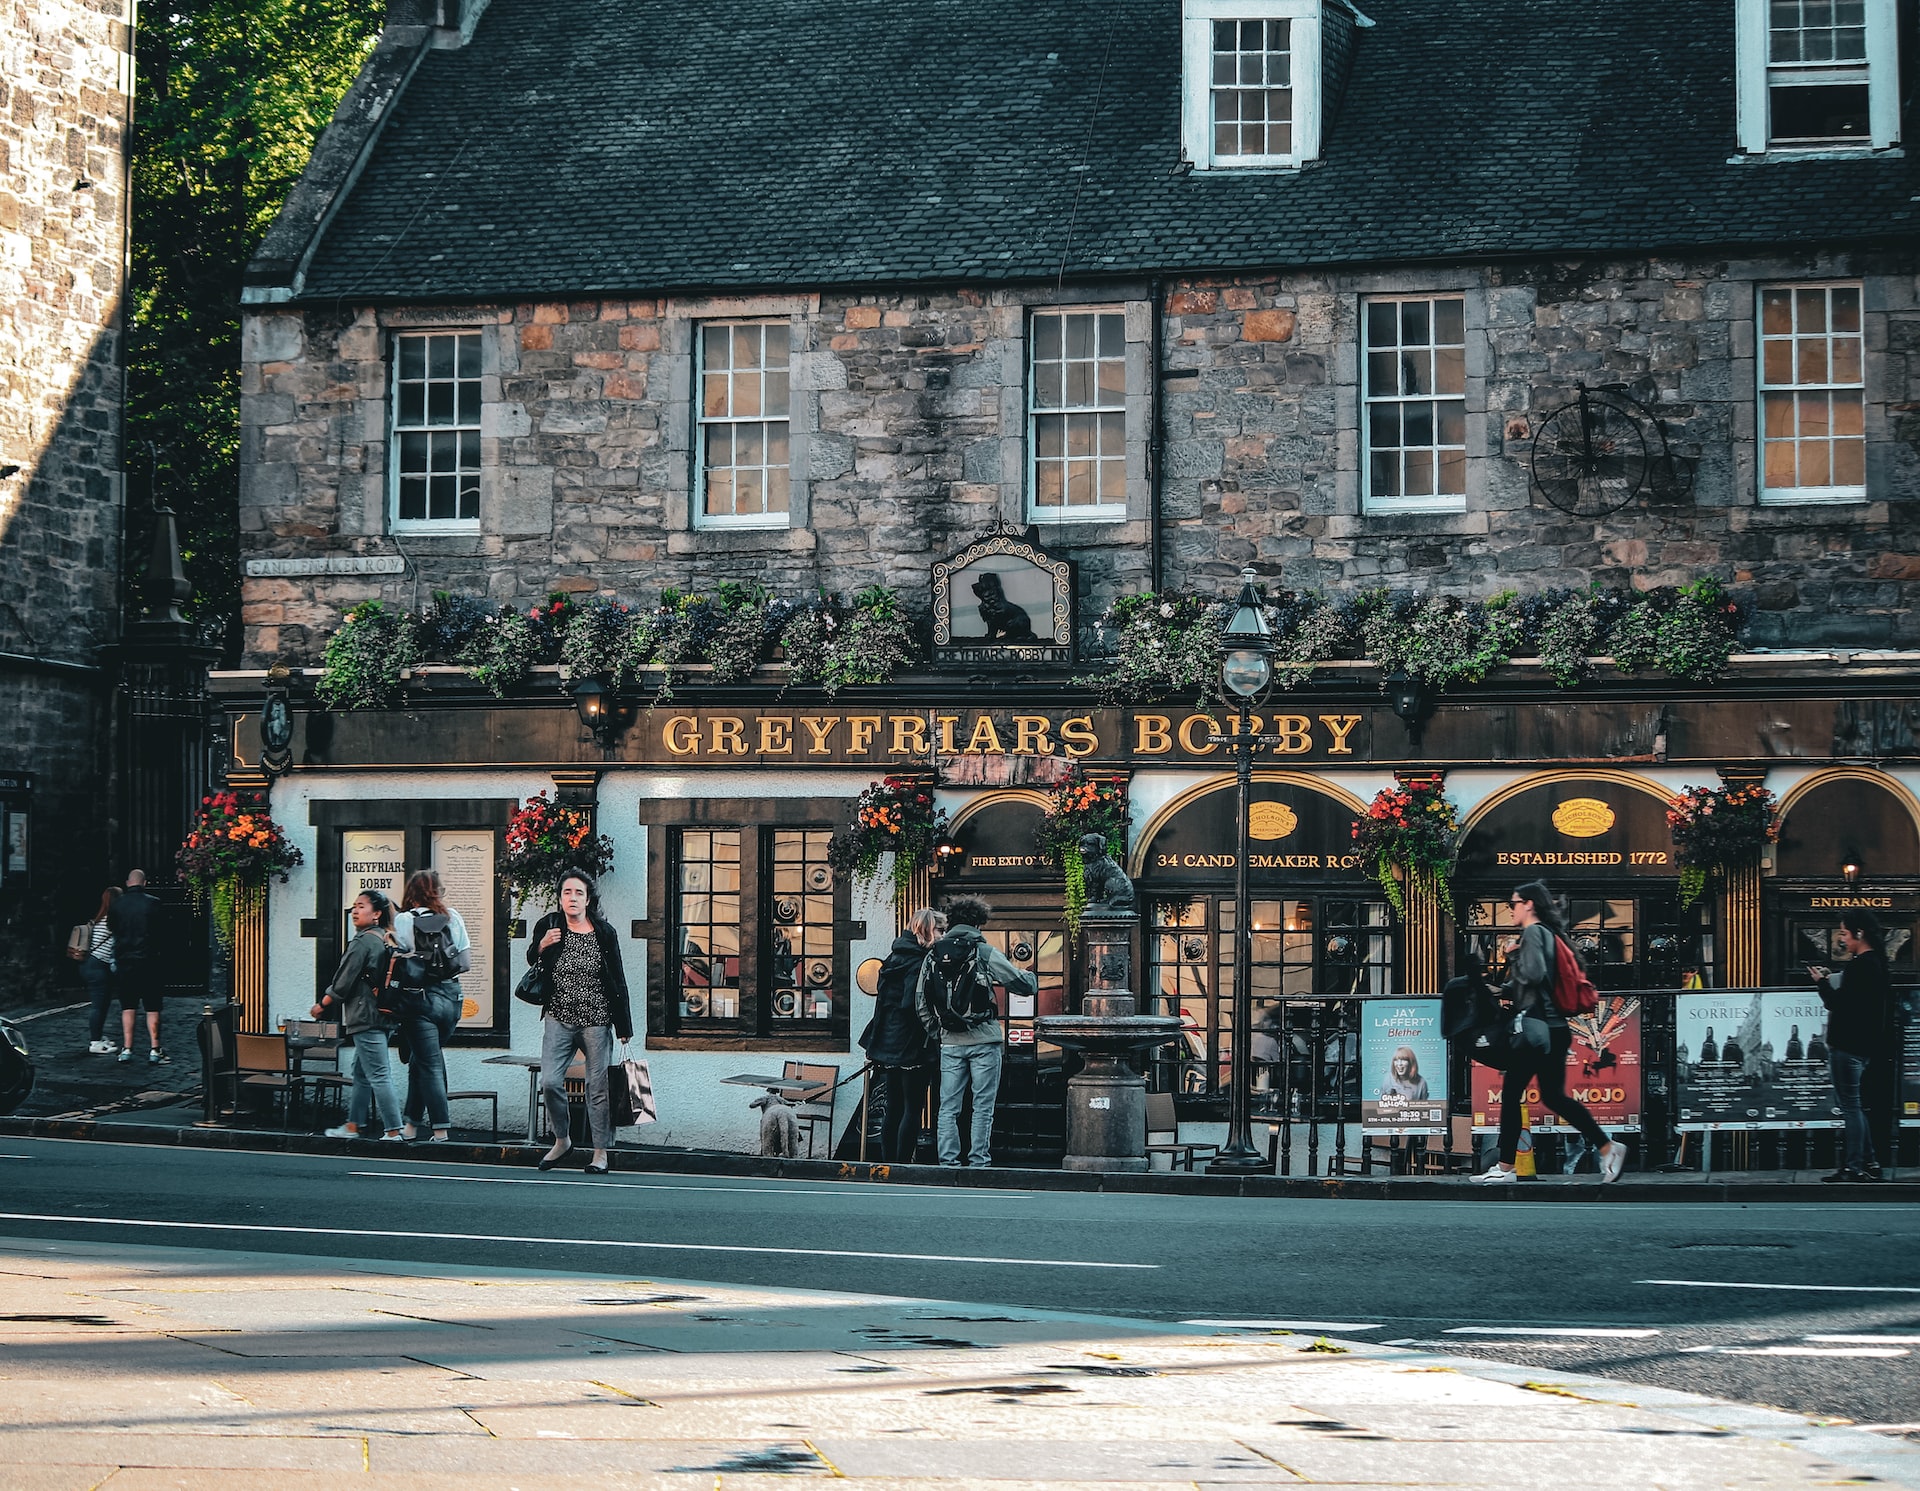 The stone facade of Greyfriars Bobby's Bar.